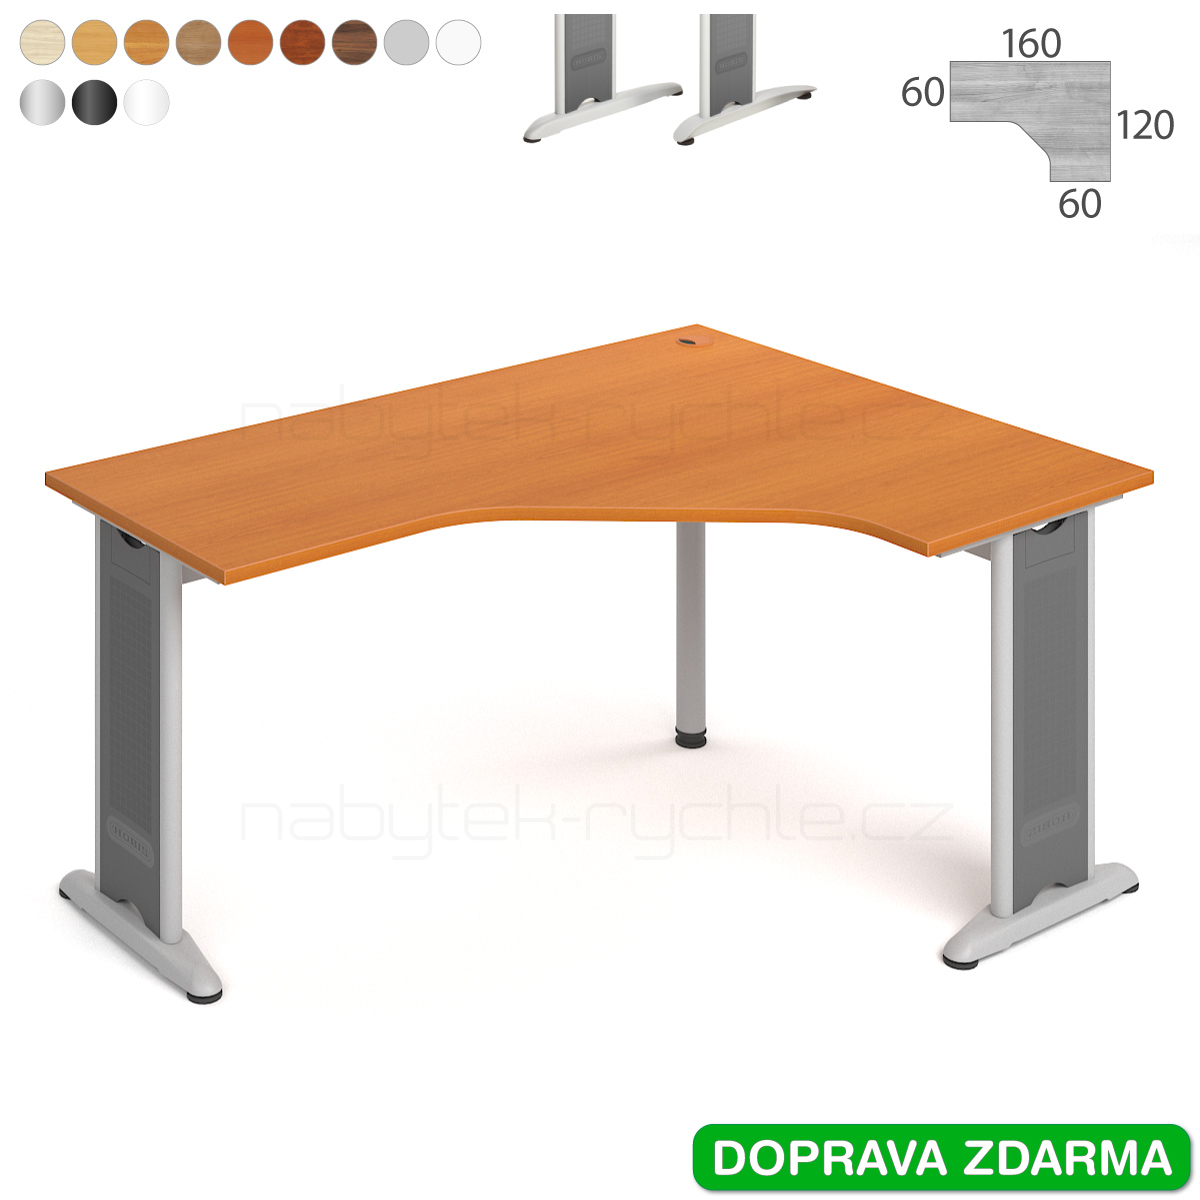 FEV 60 L Hobis Flex - Stůl 160 x 120